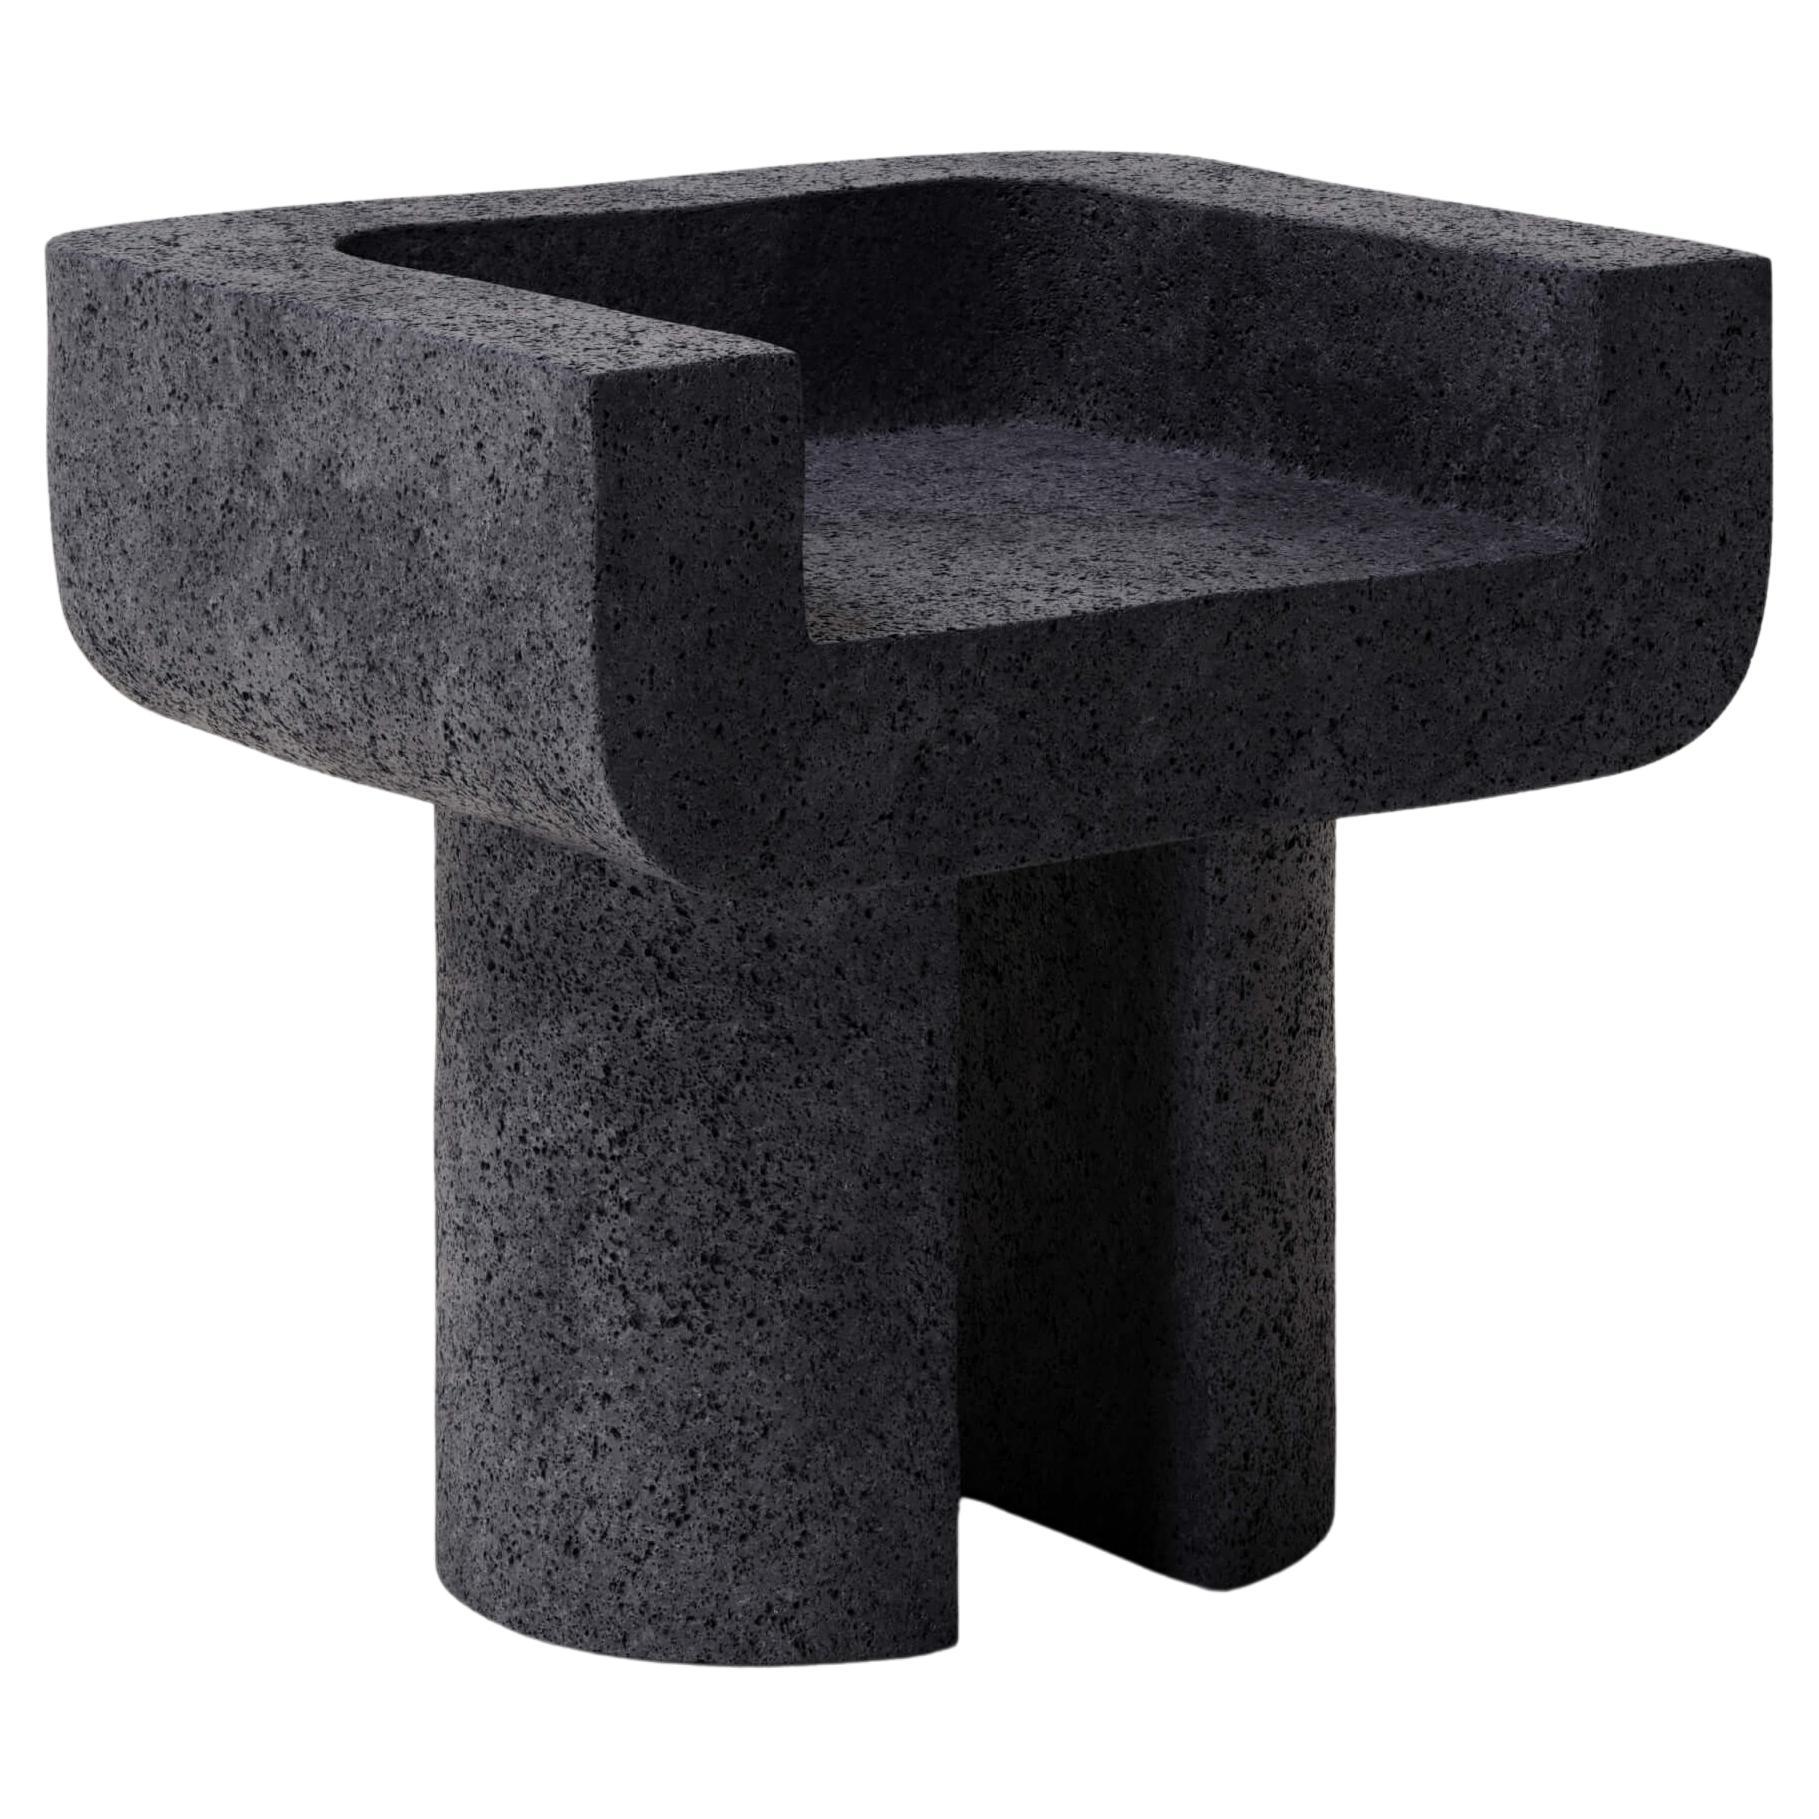 M_001 Lava Rock Chair by Monolith Studio